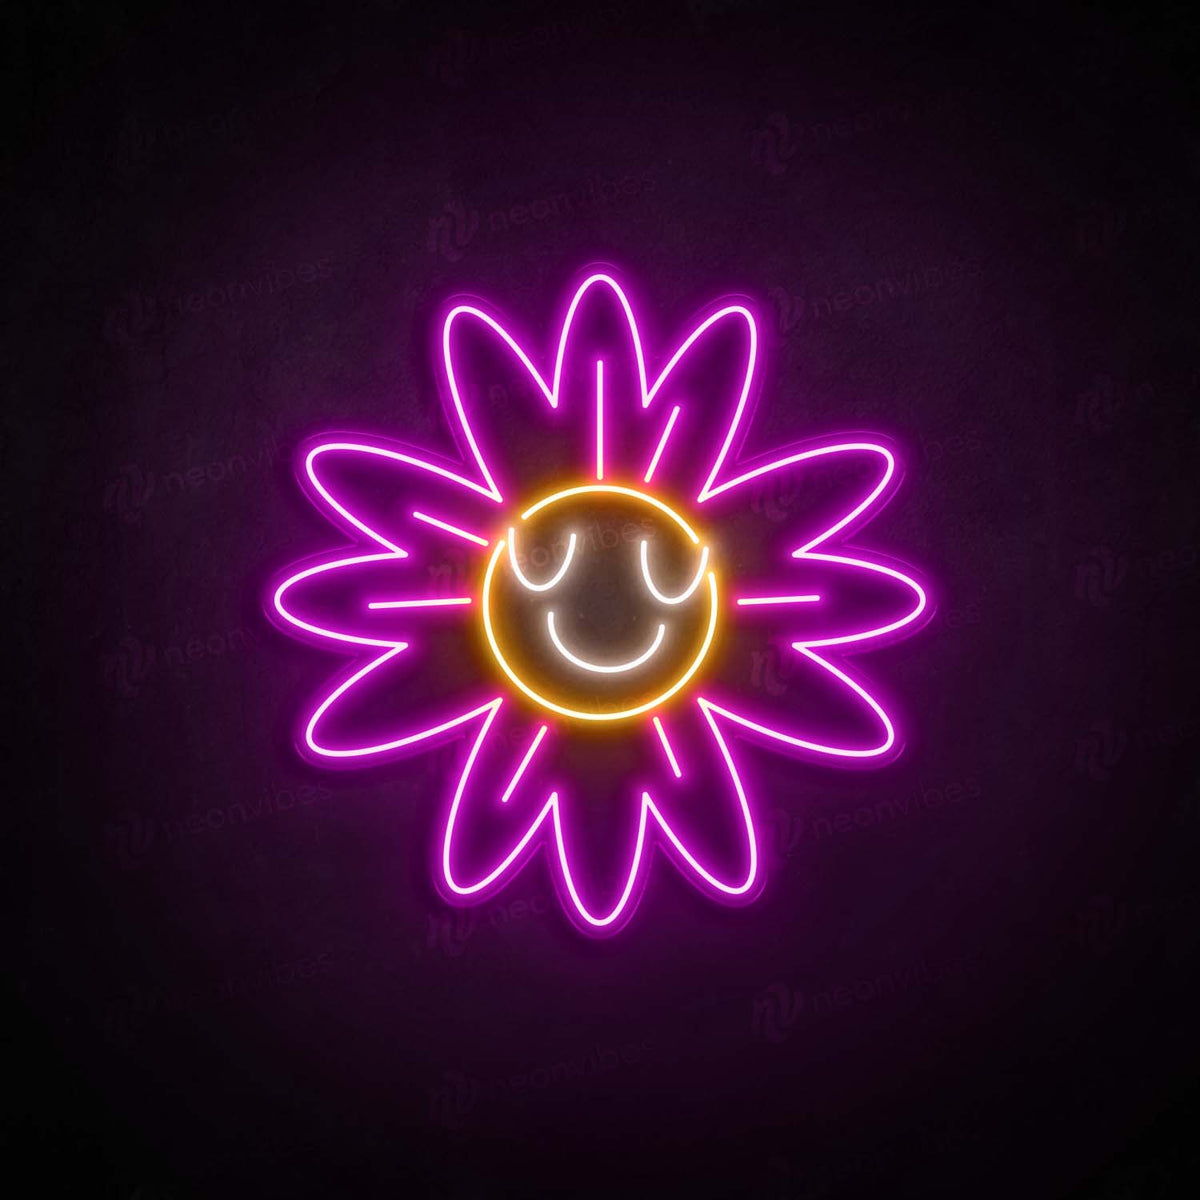 smiley flower neon sign